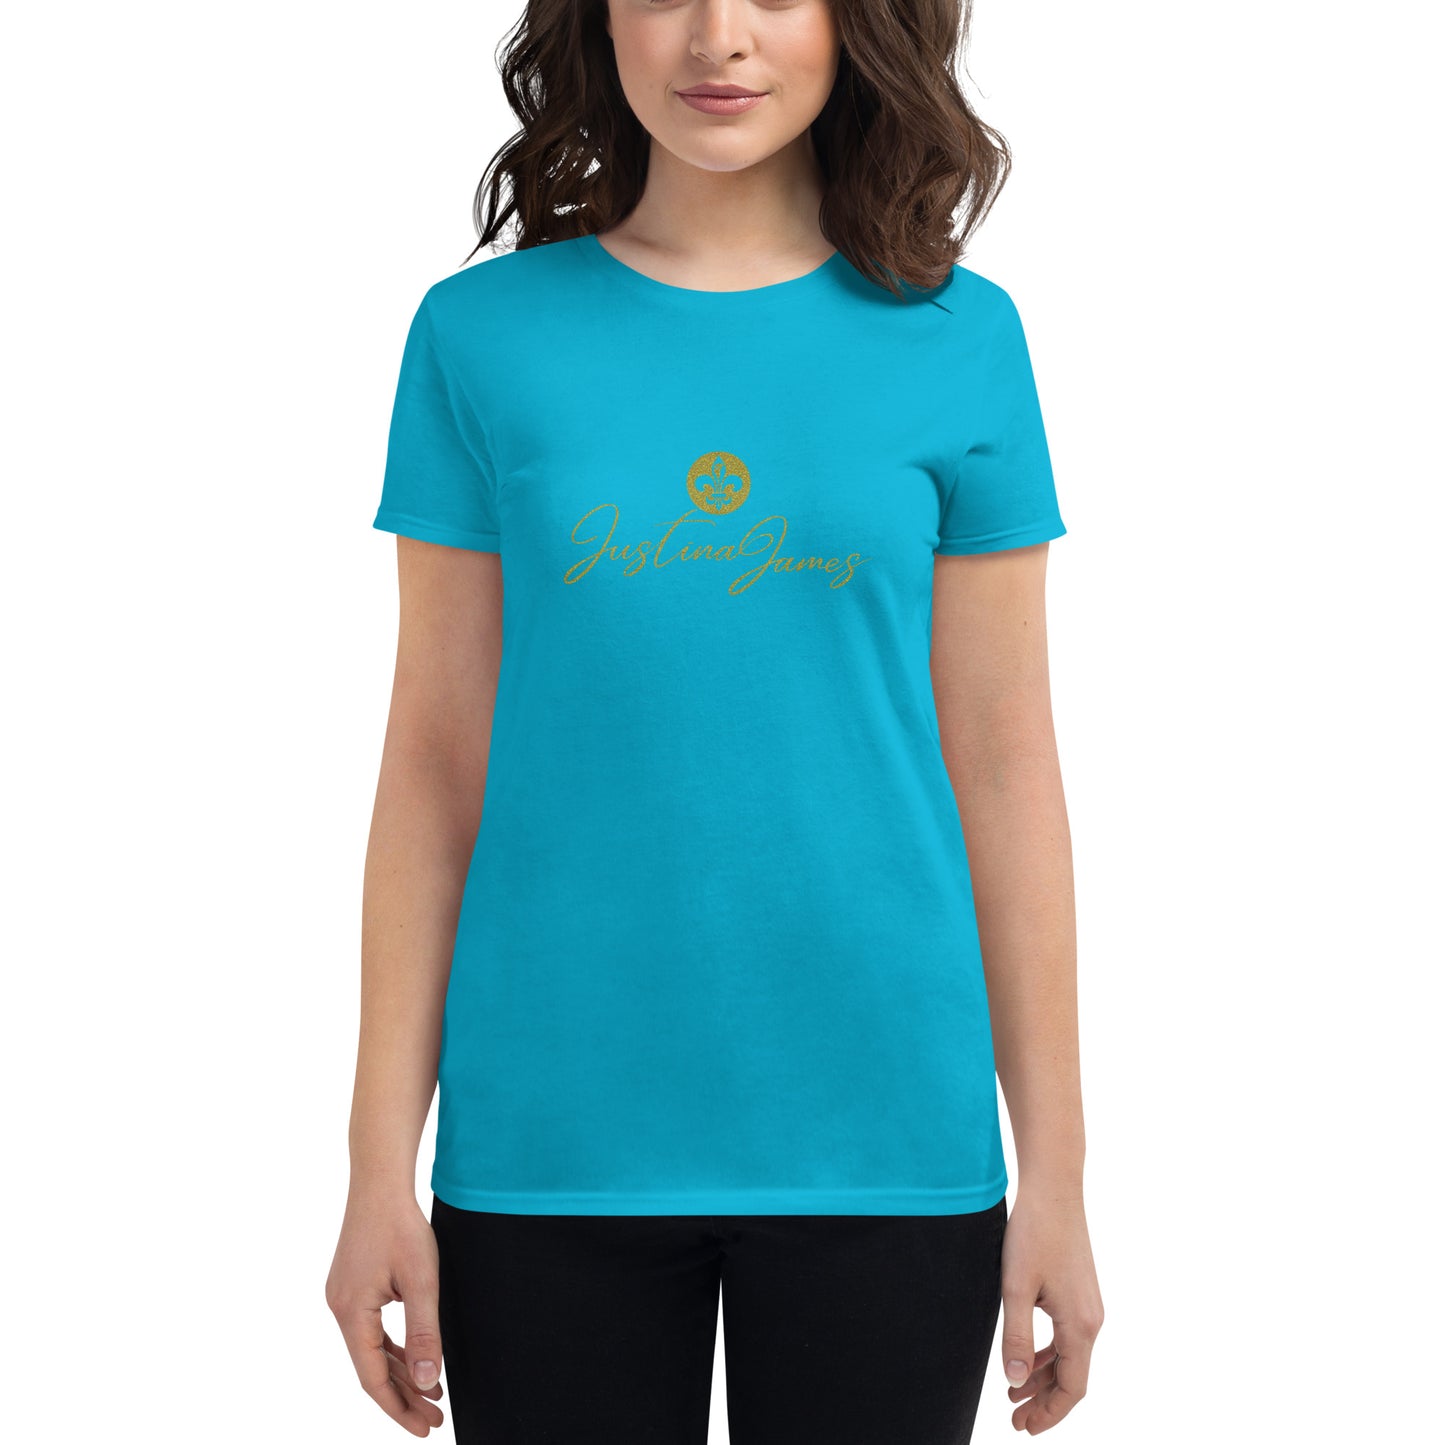 Justina James Women's short sleeve t-shirt